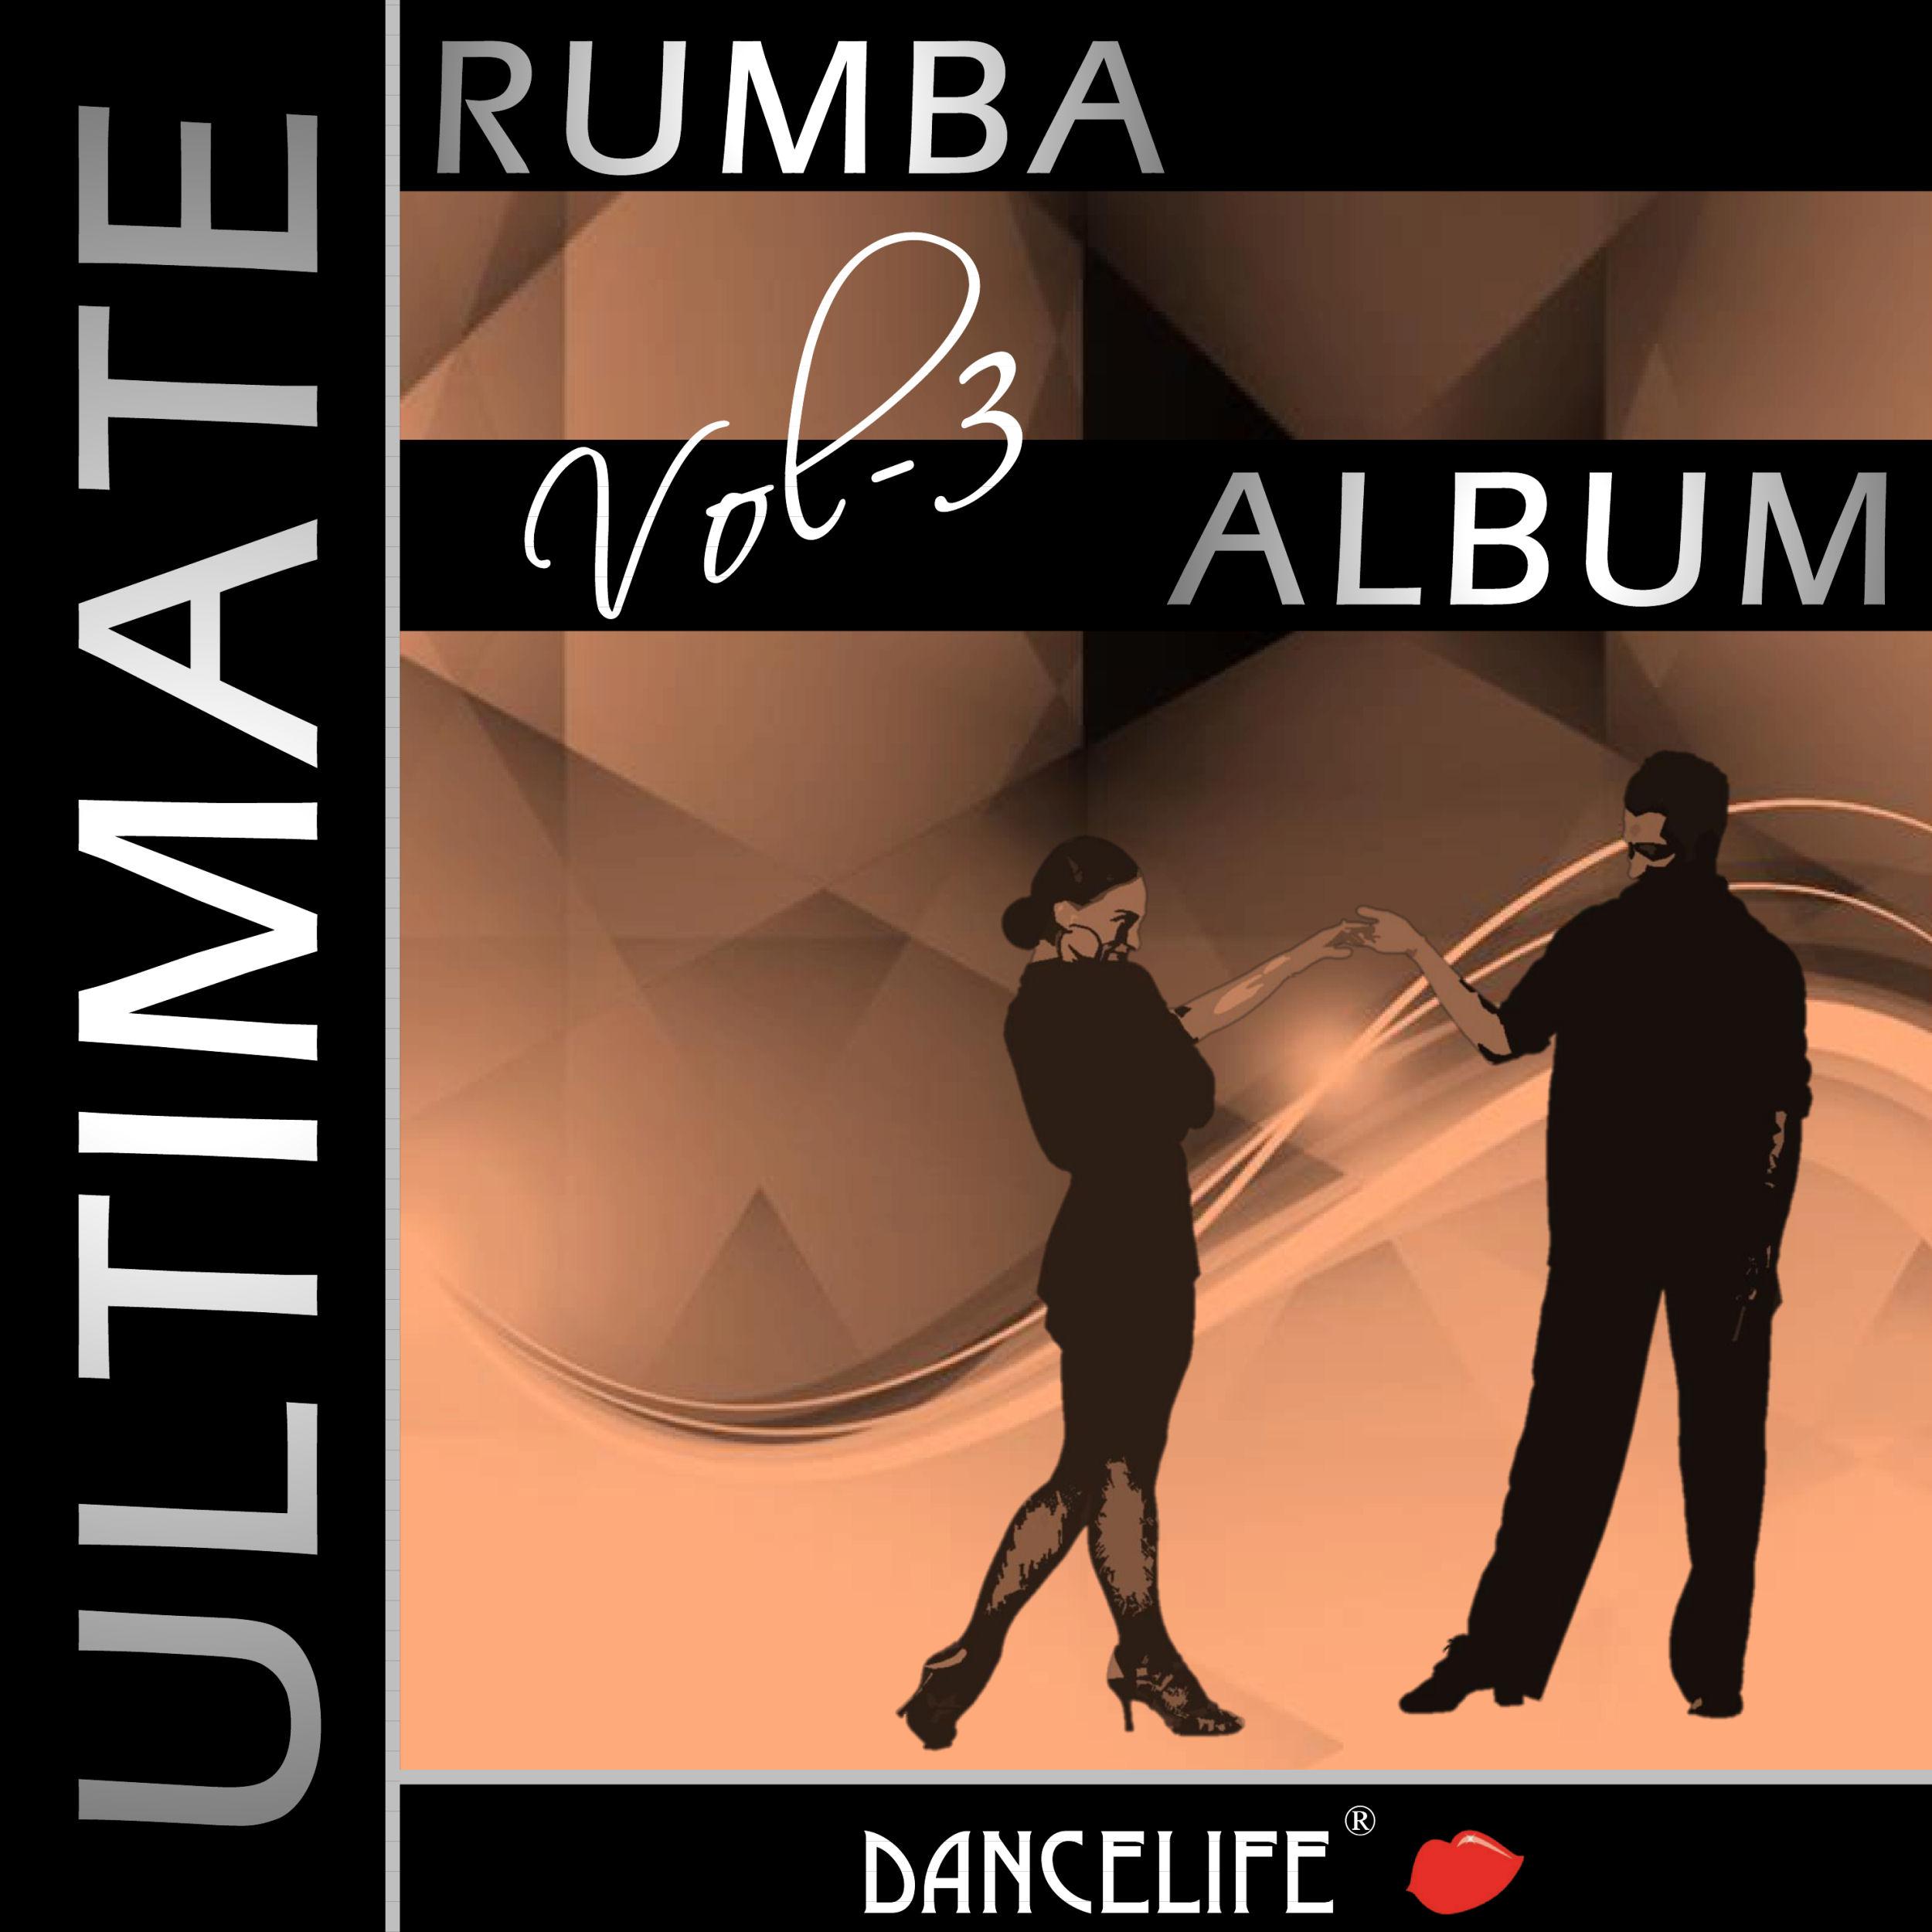 Dancelife presents: The Ultimate Rumba Album, Vol. 3